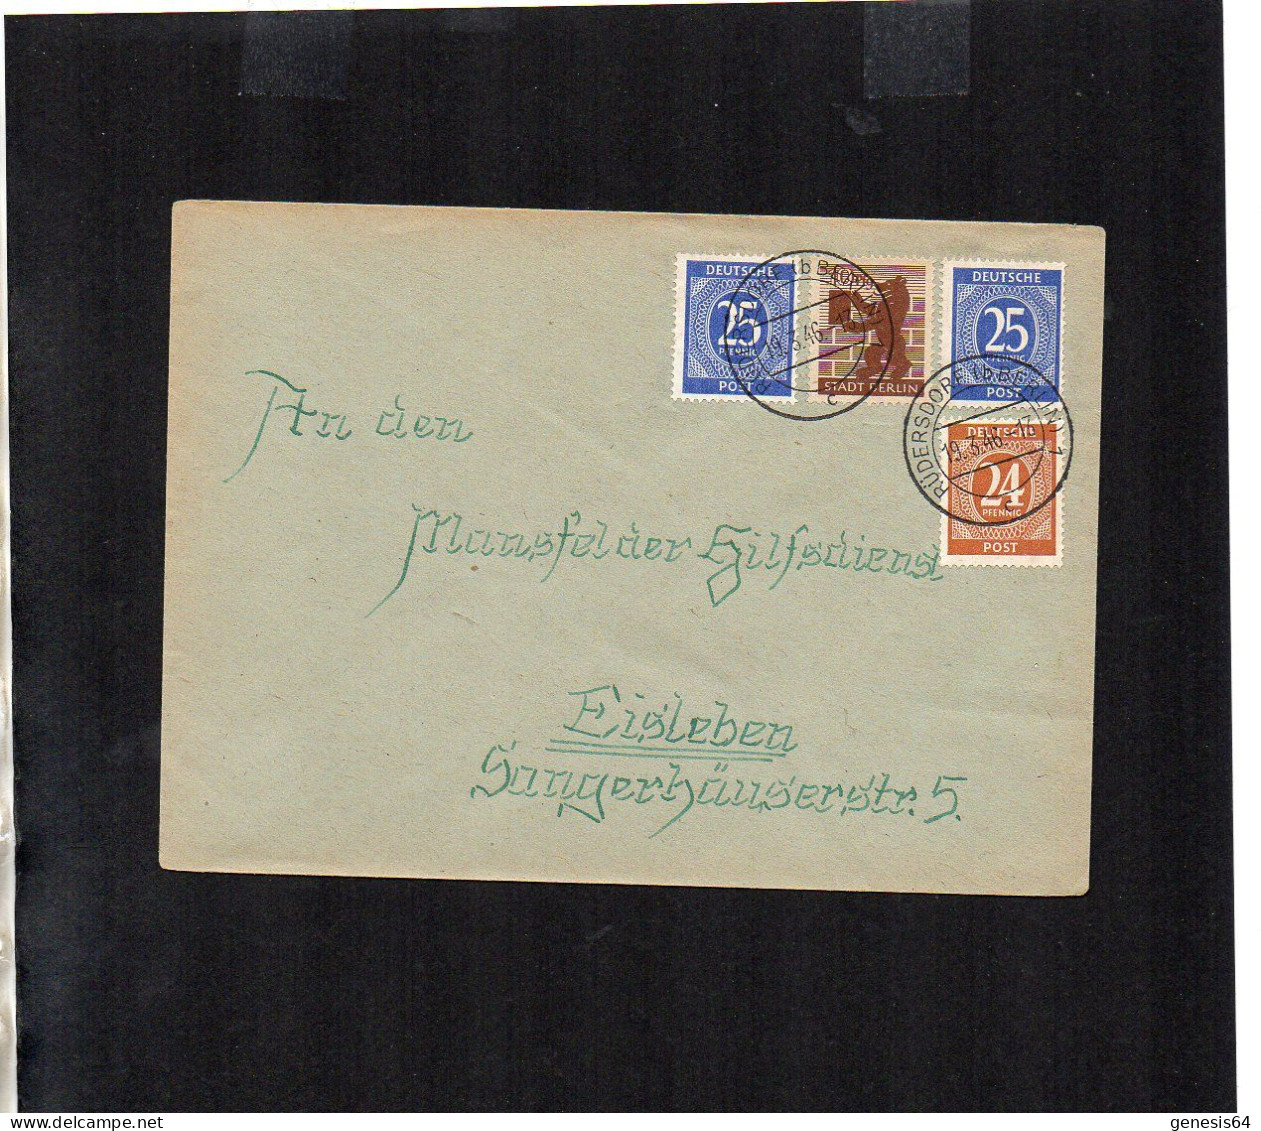 Berlin Brandenburg - Brief Mit Mischfrankatur - Rüdersdorf - 19.3.46 - P2 (1ZKSBZ062) - Berlijn & Brandenburg